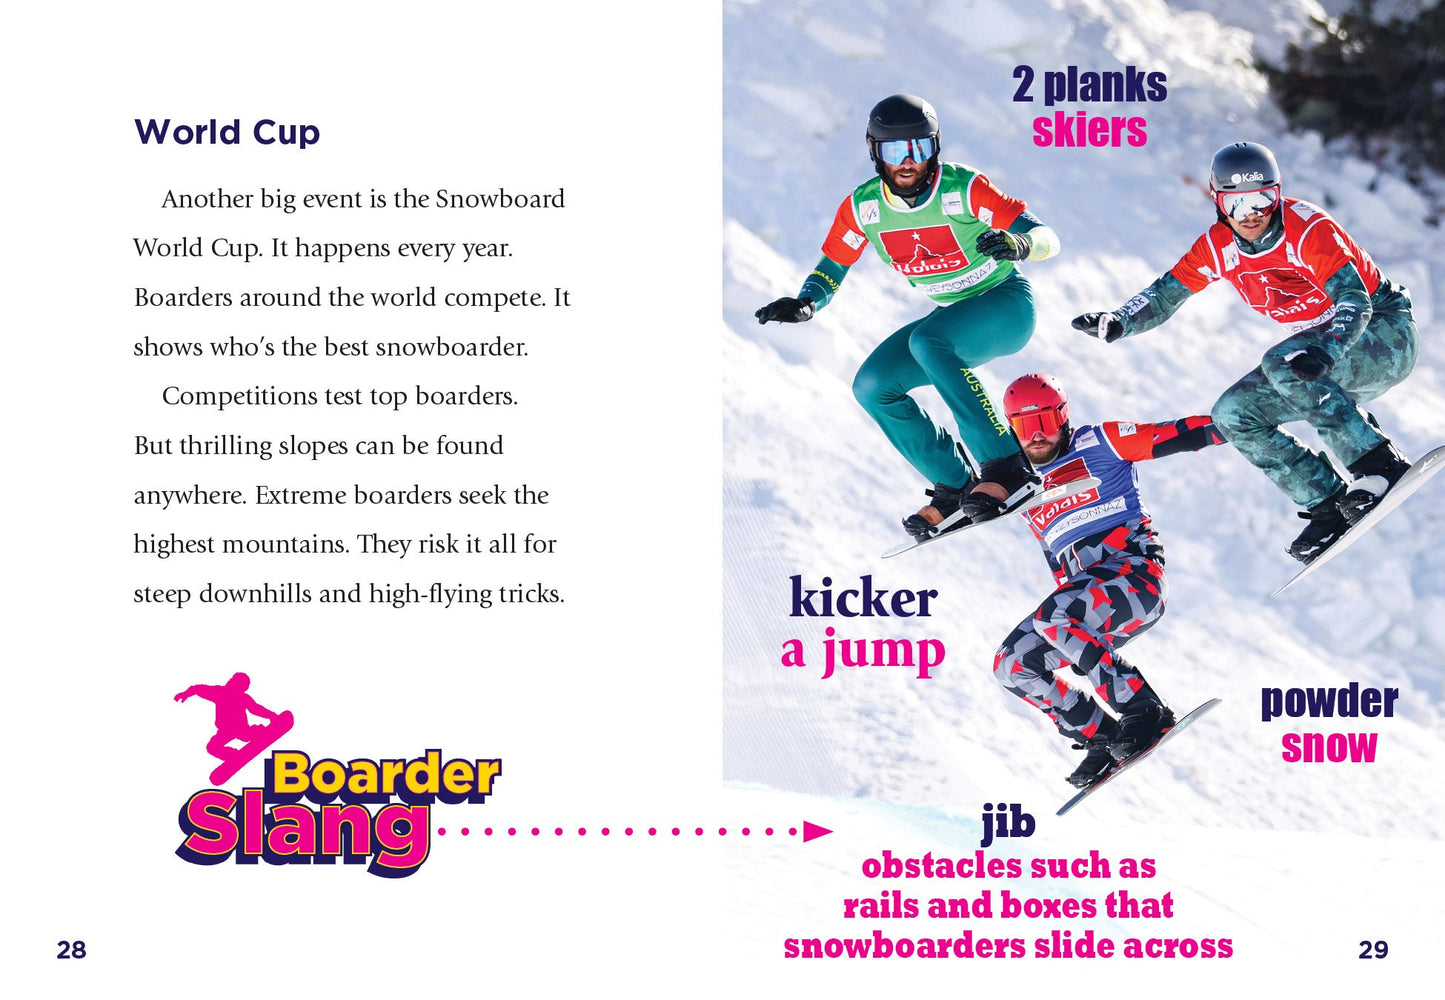 Extreme Sports: Snowboarding